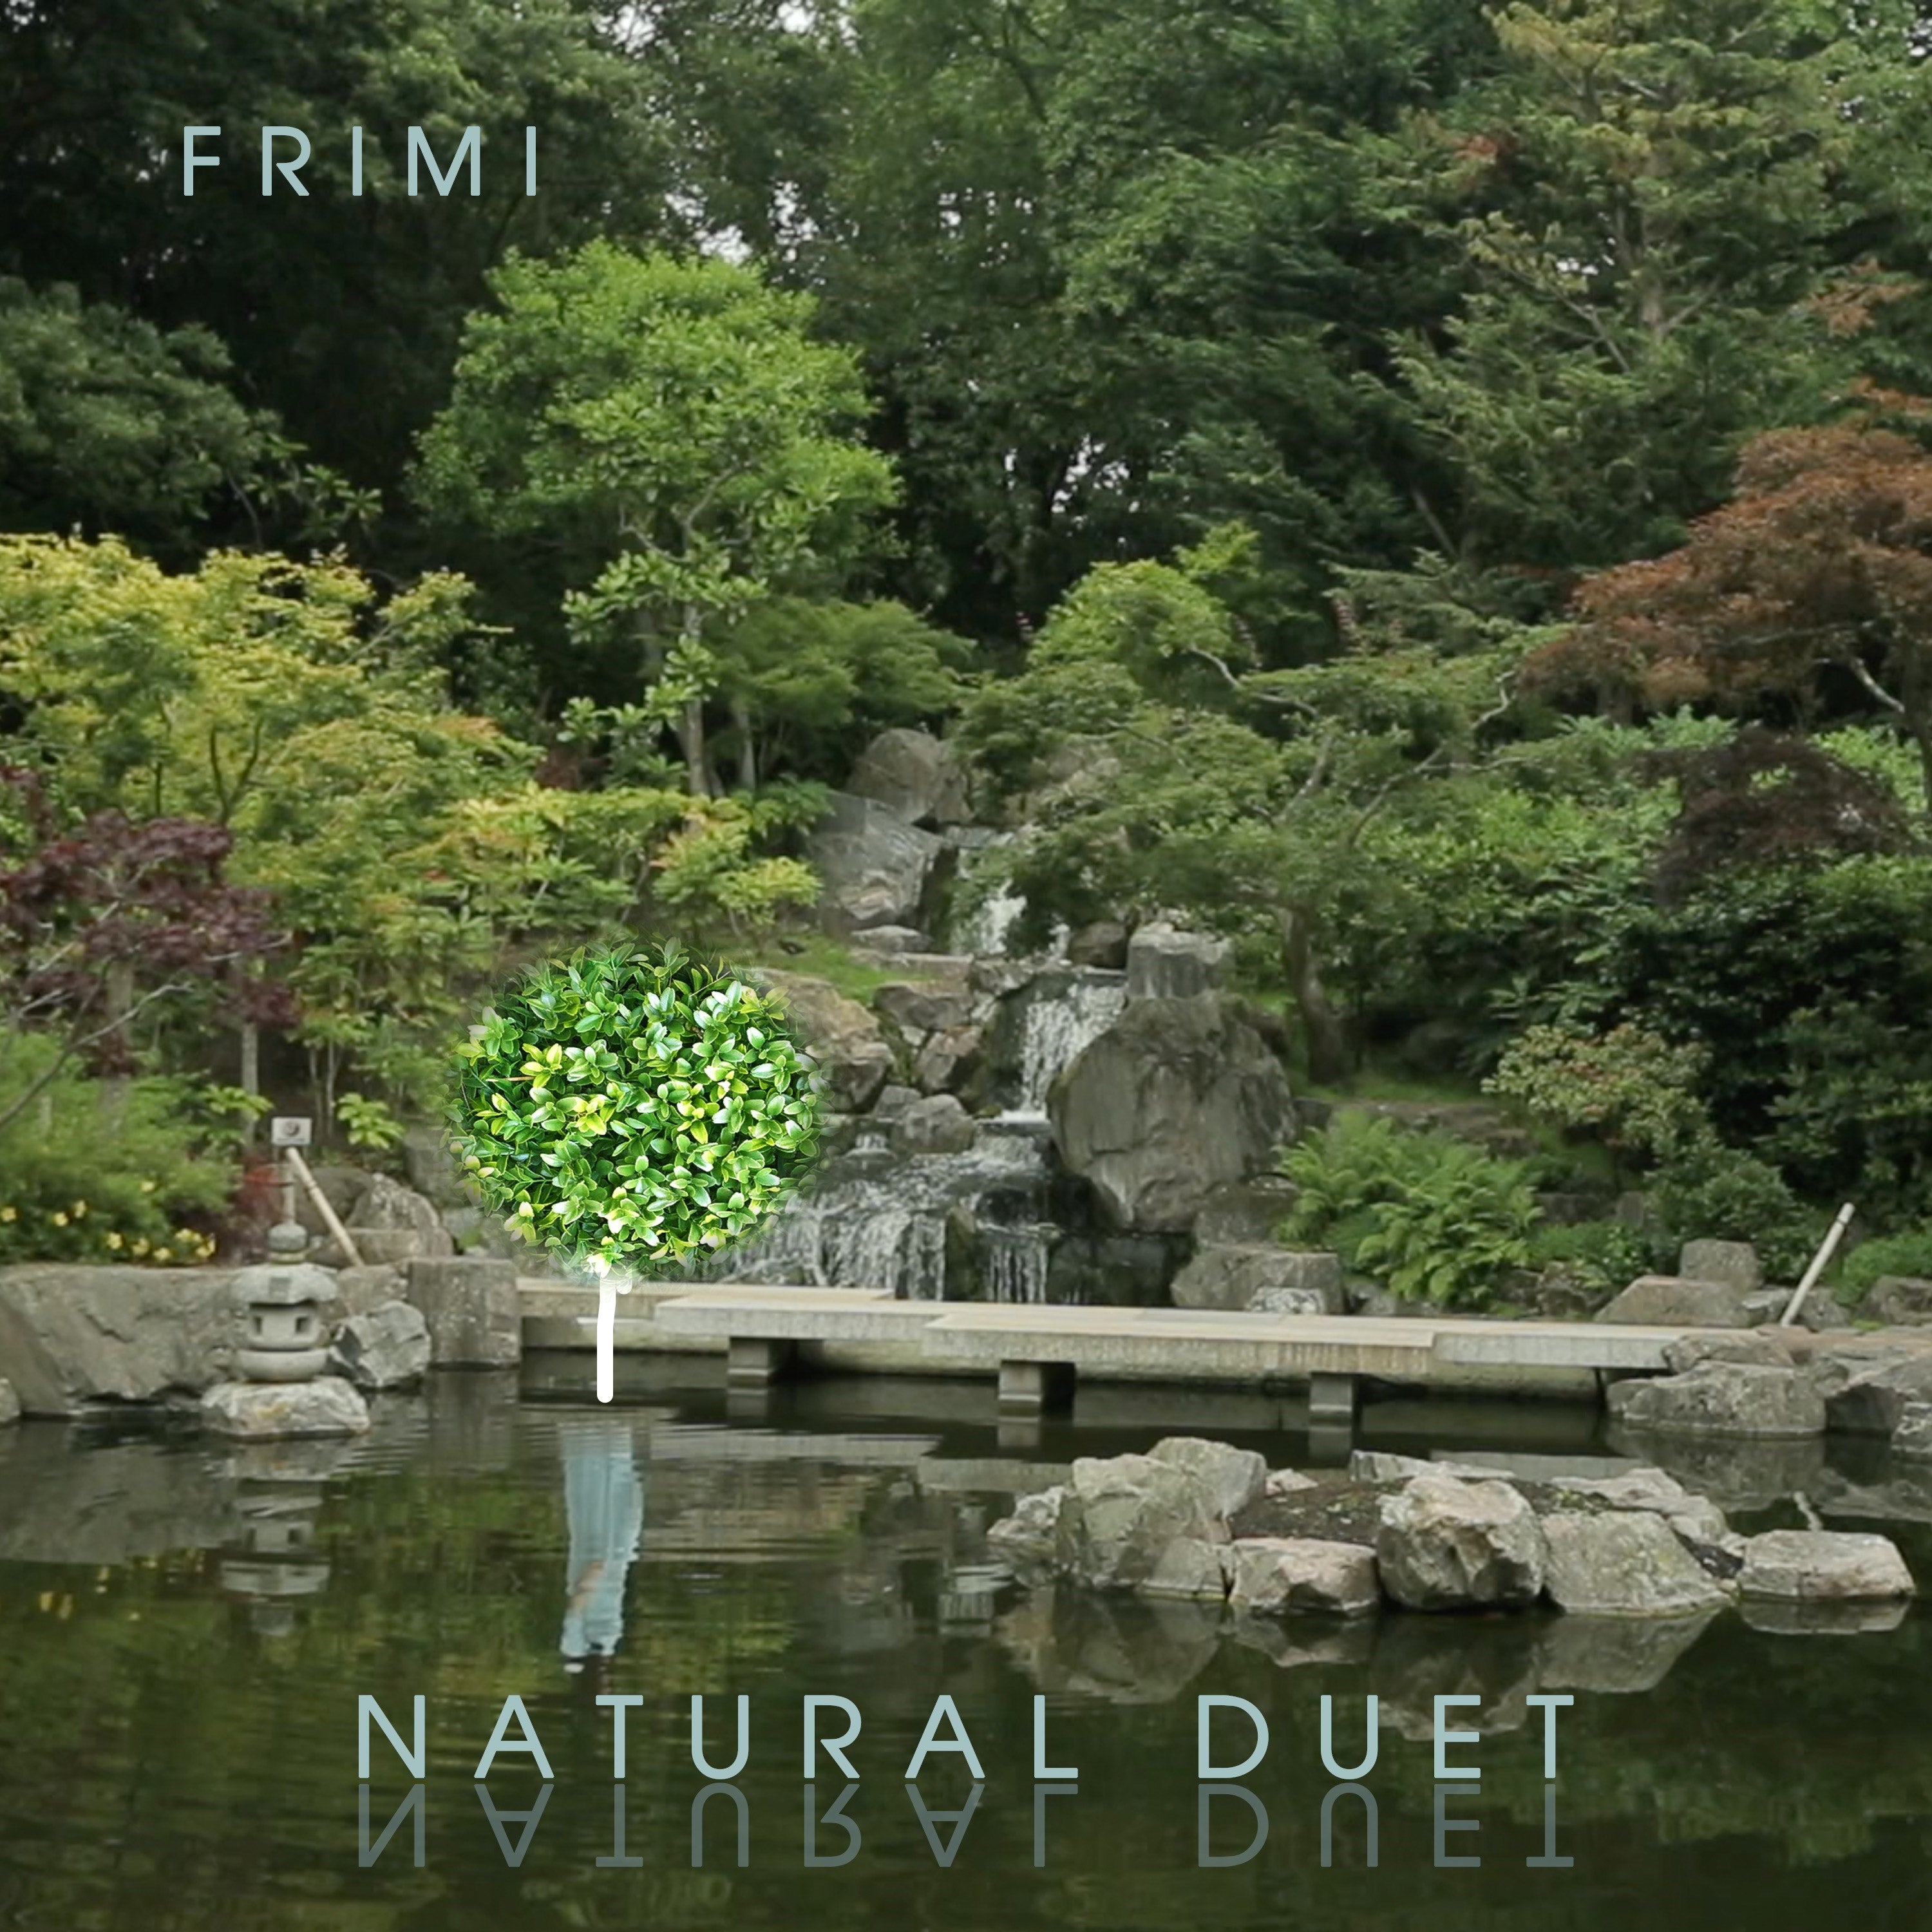 Frimi - Natural Duet (Single)